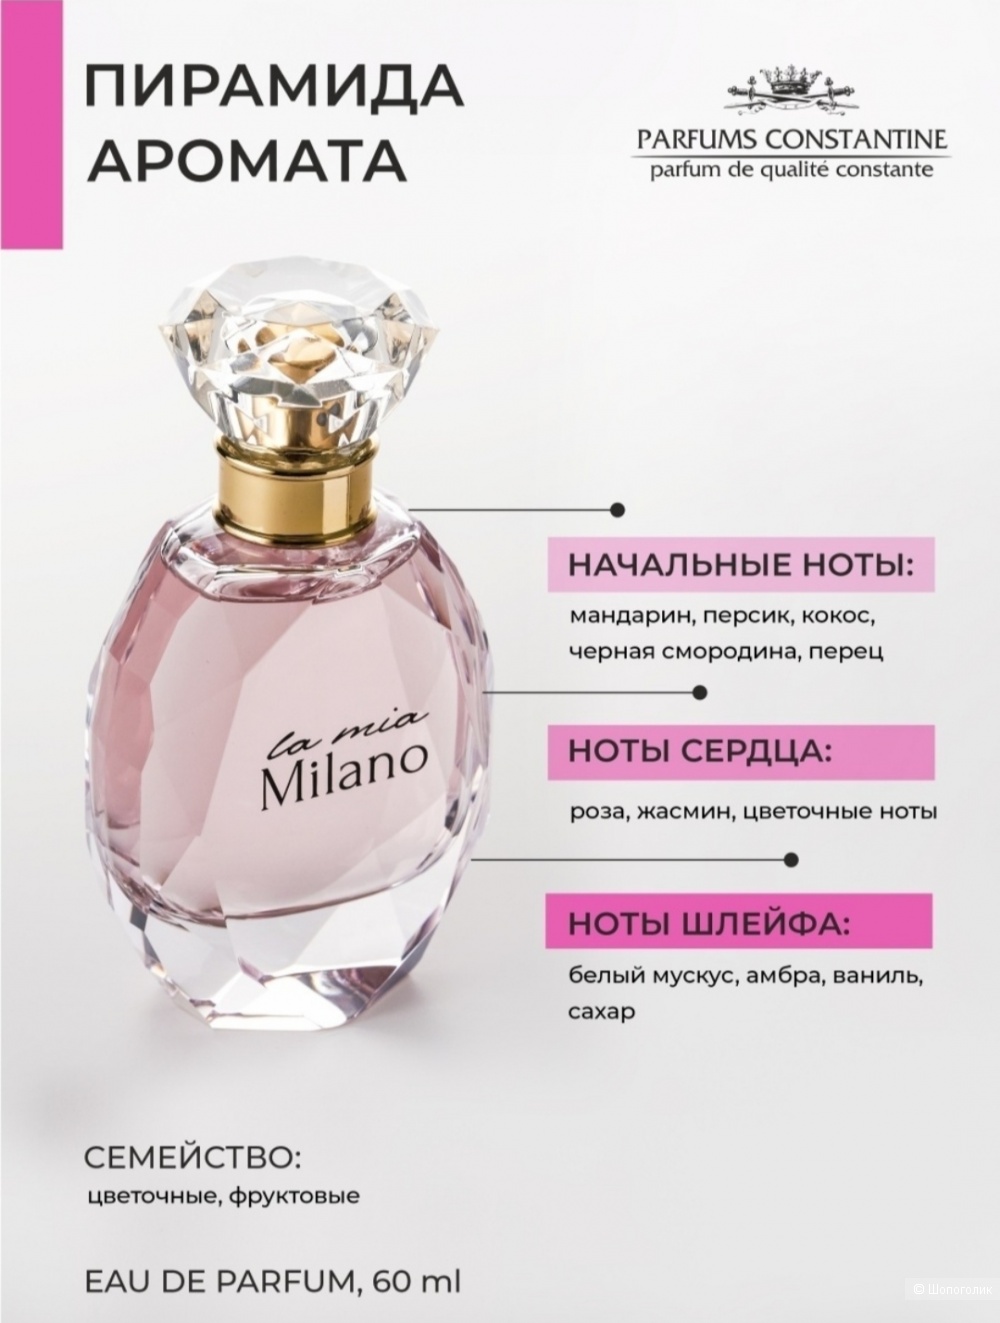 Духи La mia Milano Parfume Constantin, 60 мл